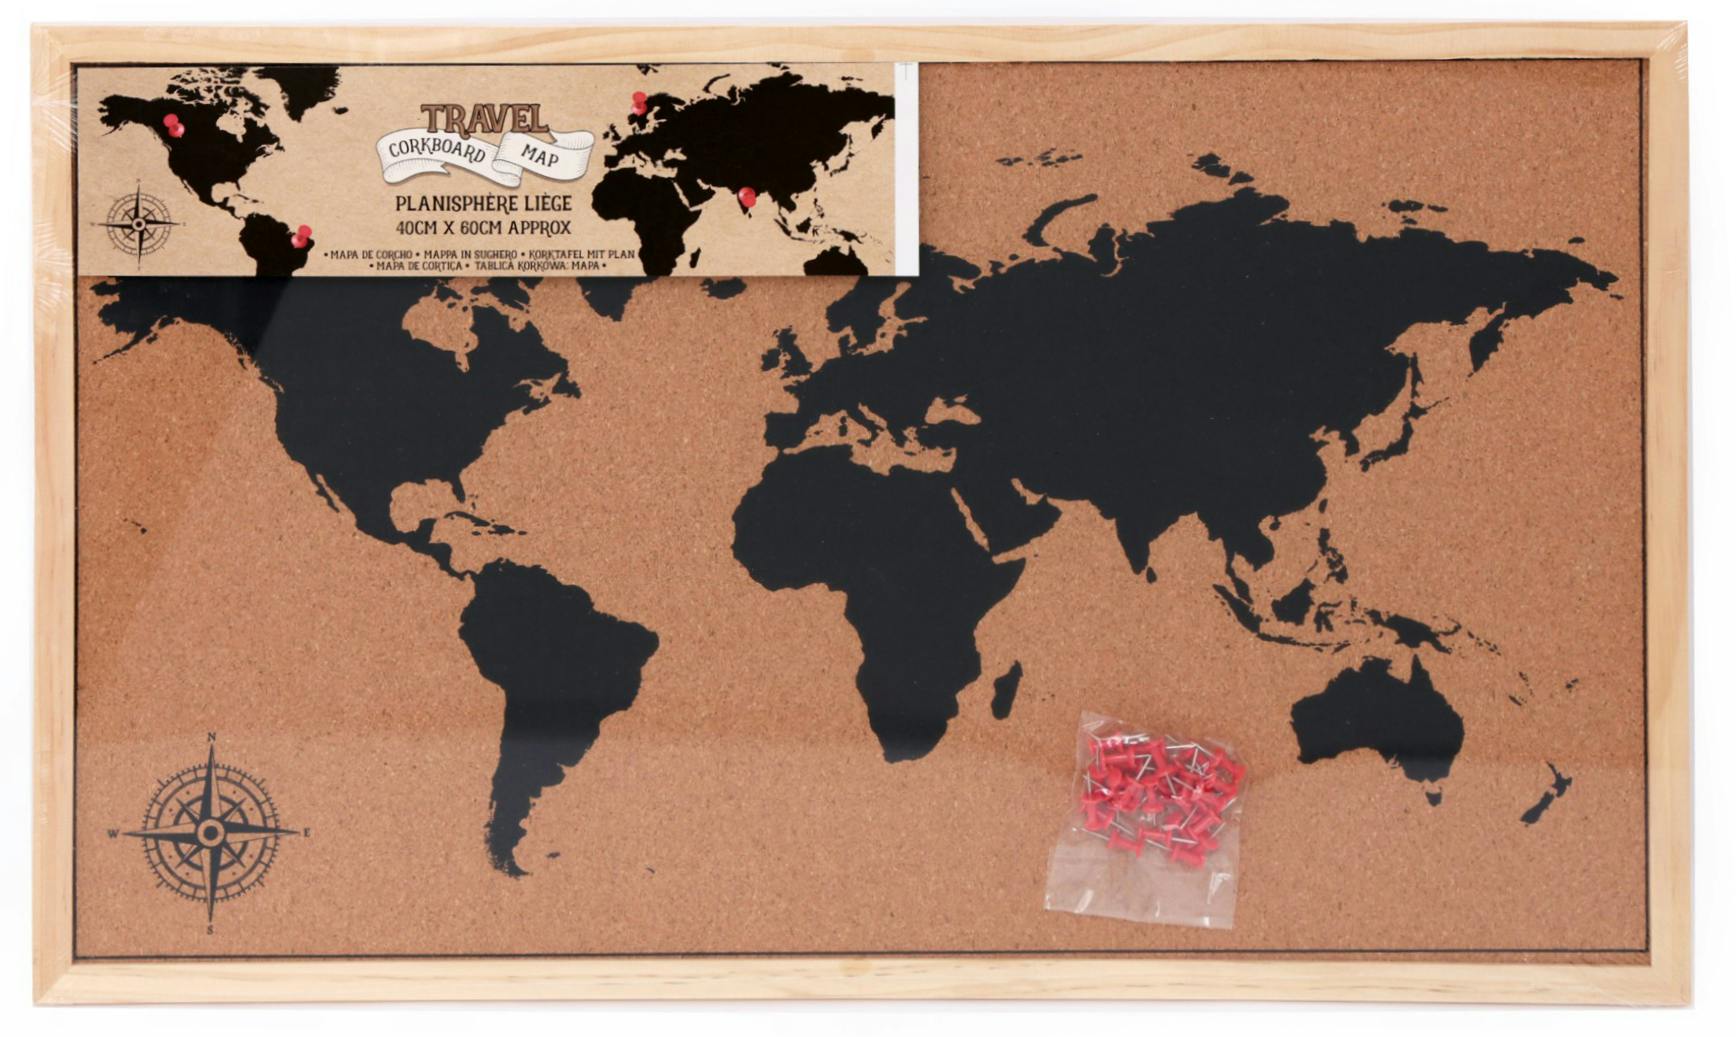 Carte du monde en liège - 40 x 30cm - PrimoLaser